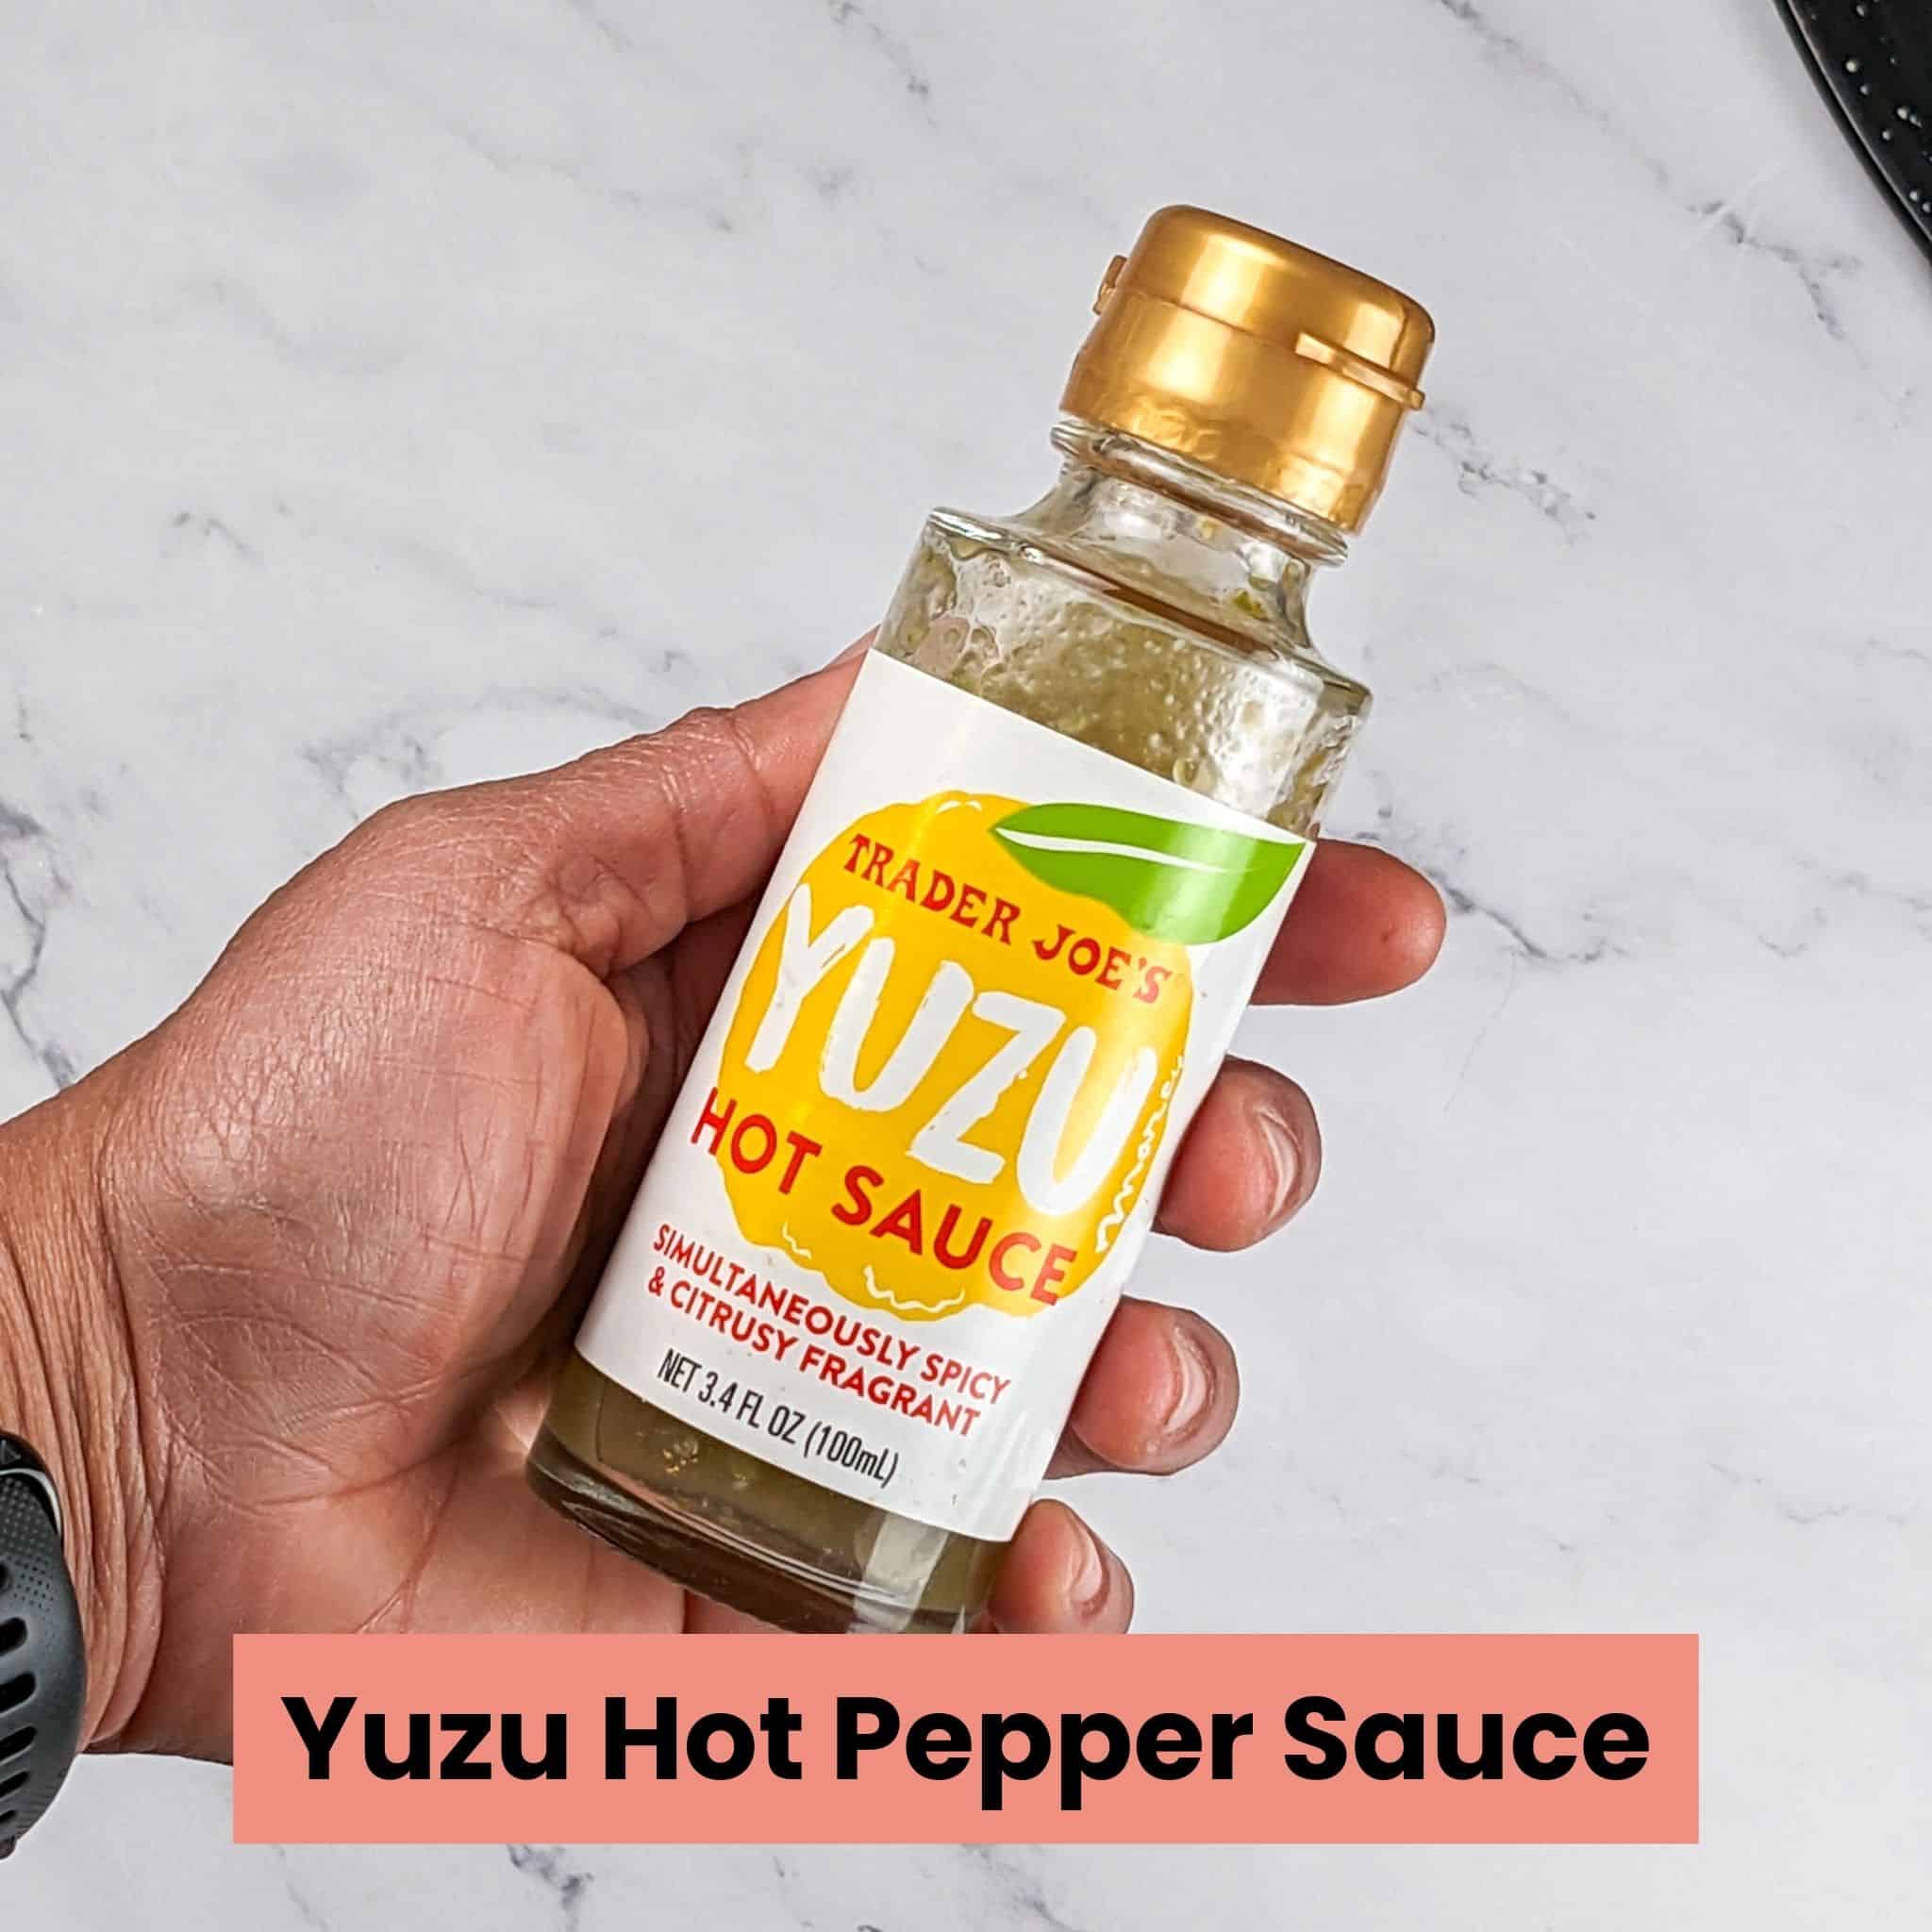 Trader Joe's Yuzu Hot Sauce held in hand.